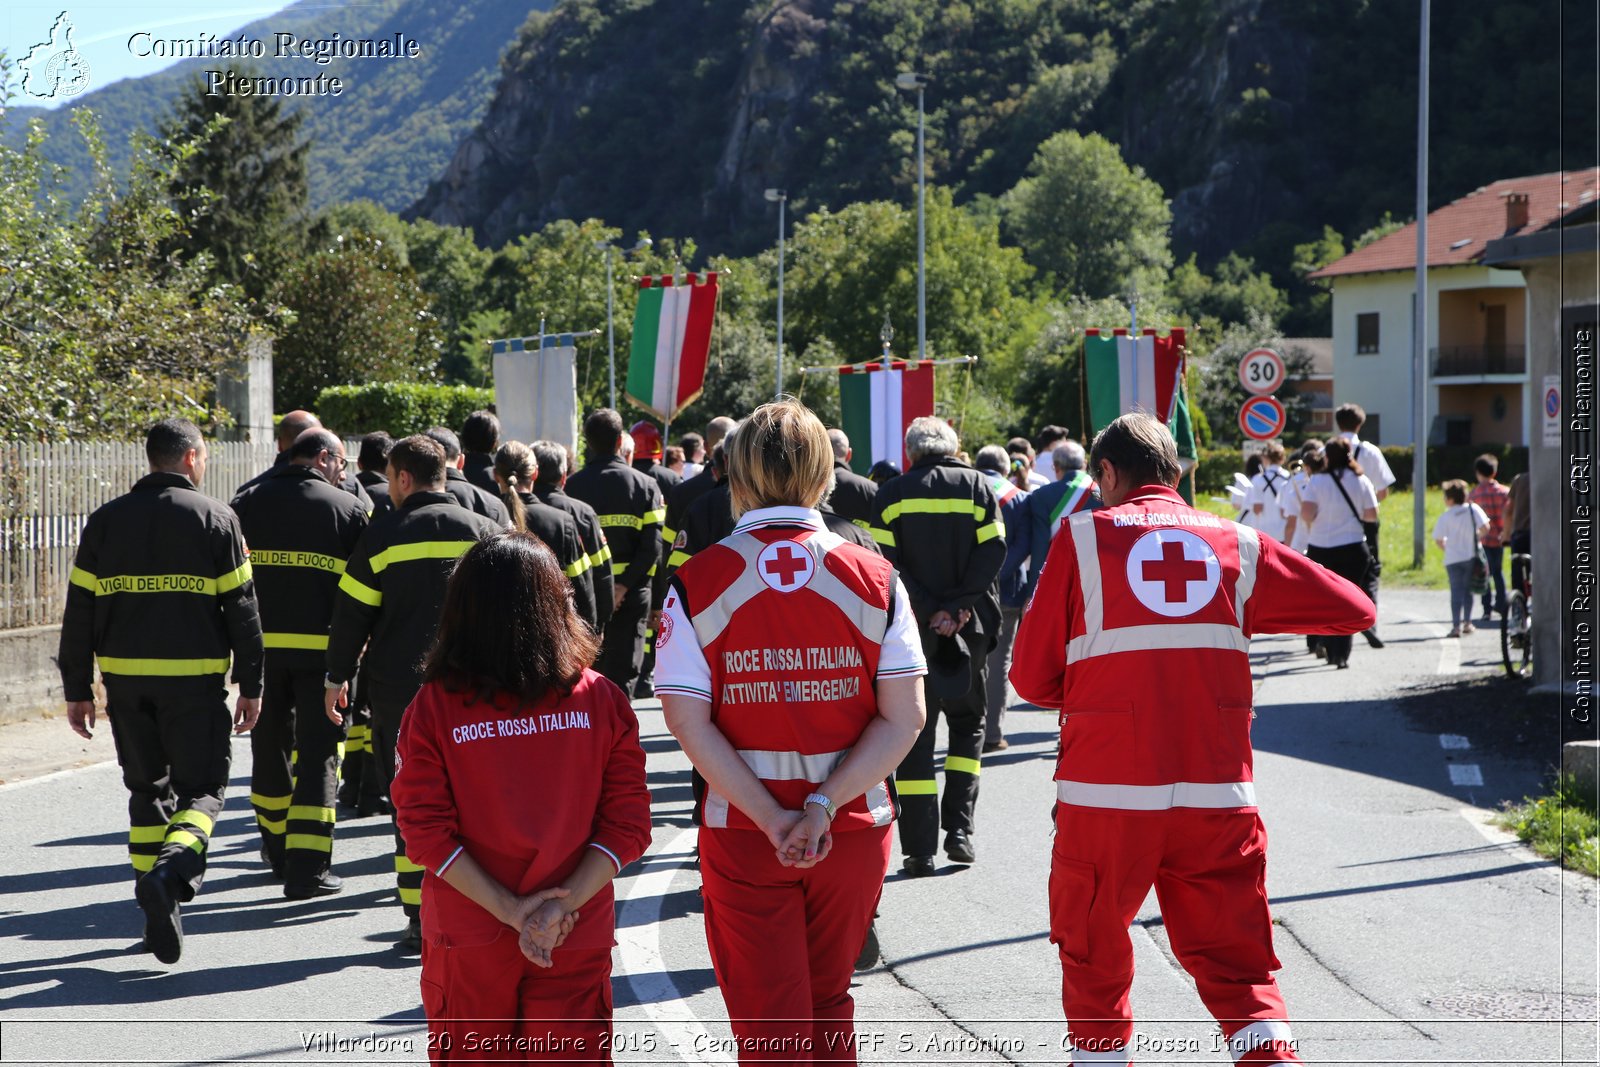 Villardora 20 Settembre 2015 - Centenario VVFF S.Antonino - Croce Rossa Italiana- Comitato Regionale del Piemonte